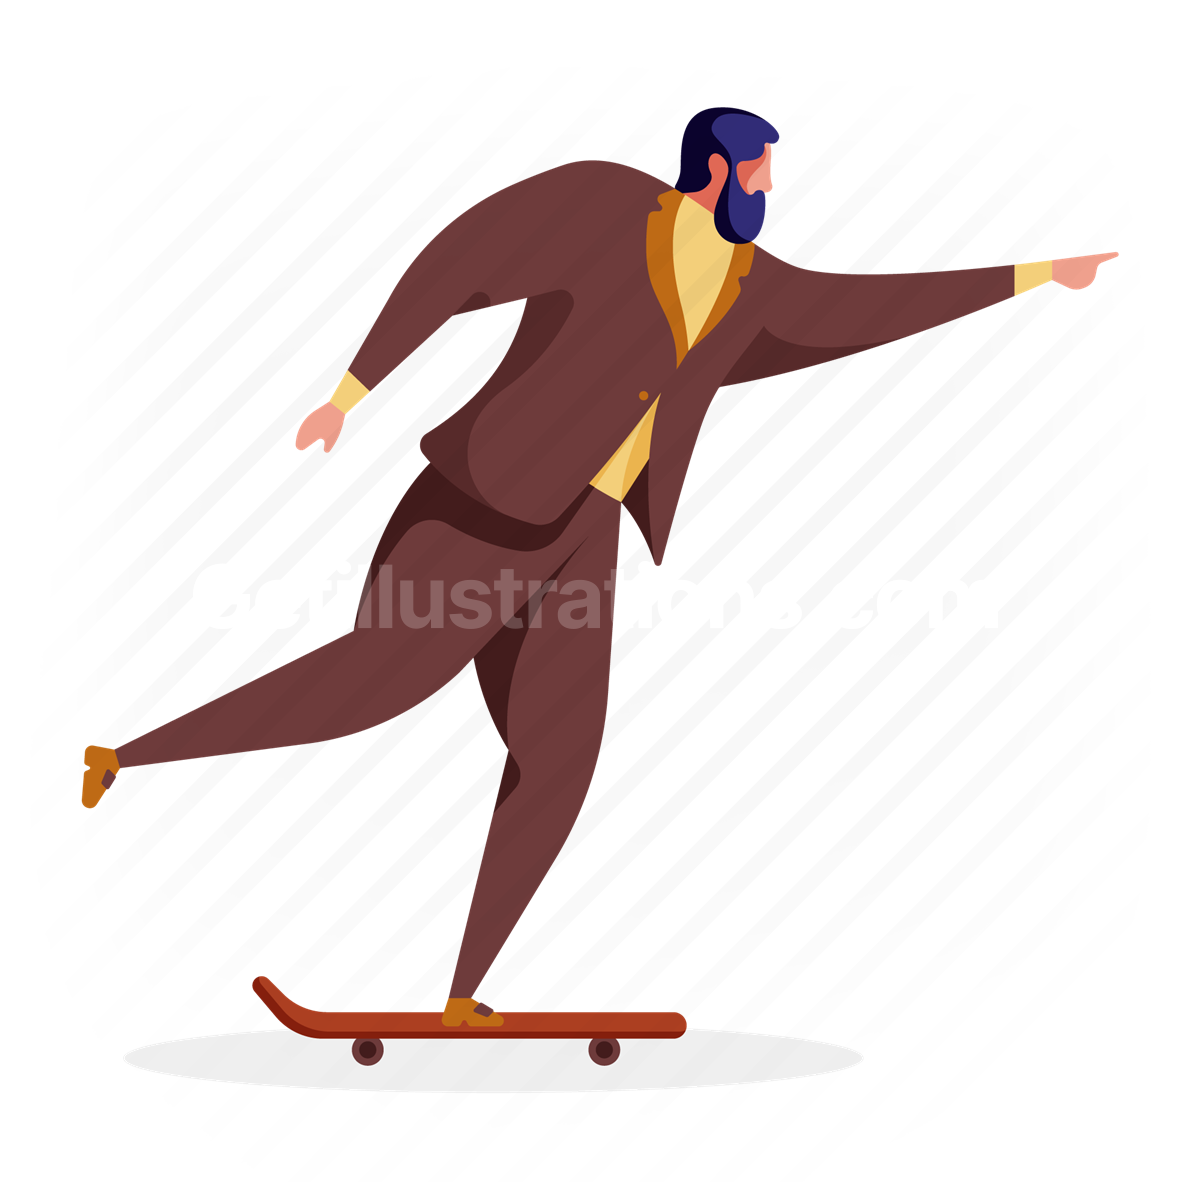 man, skateboard, skating, activity